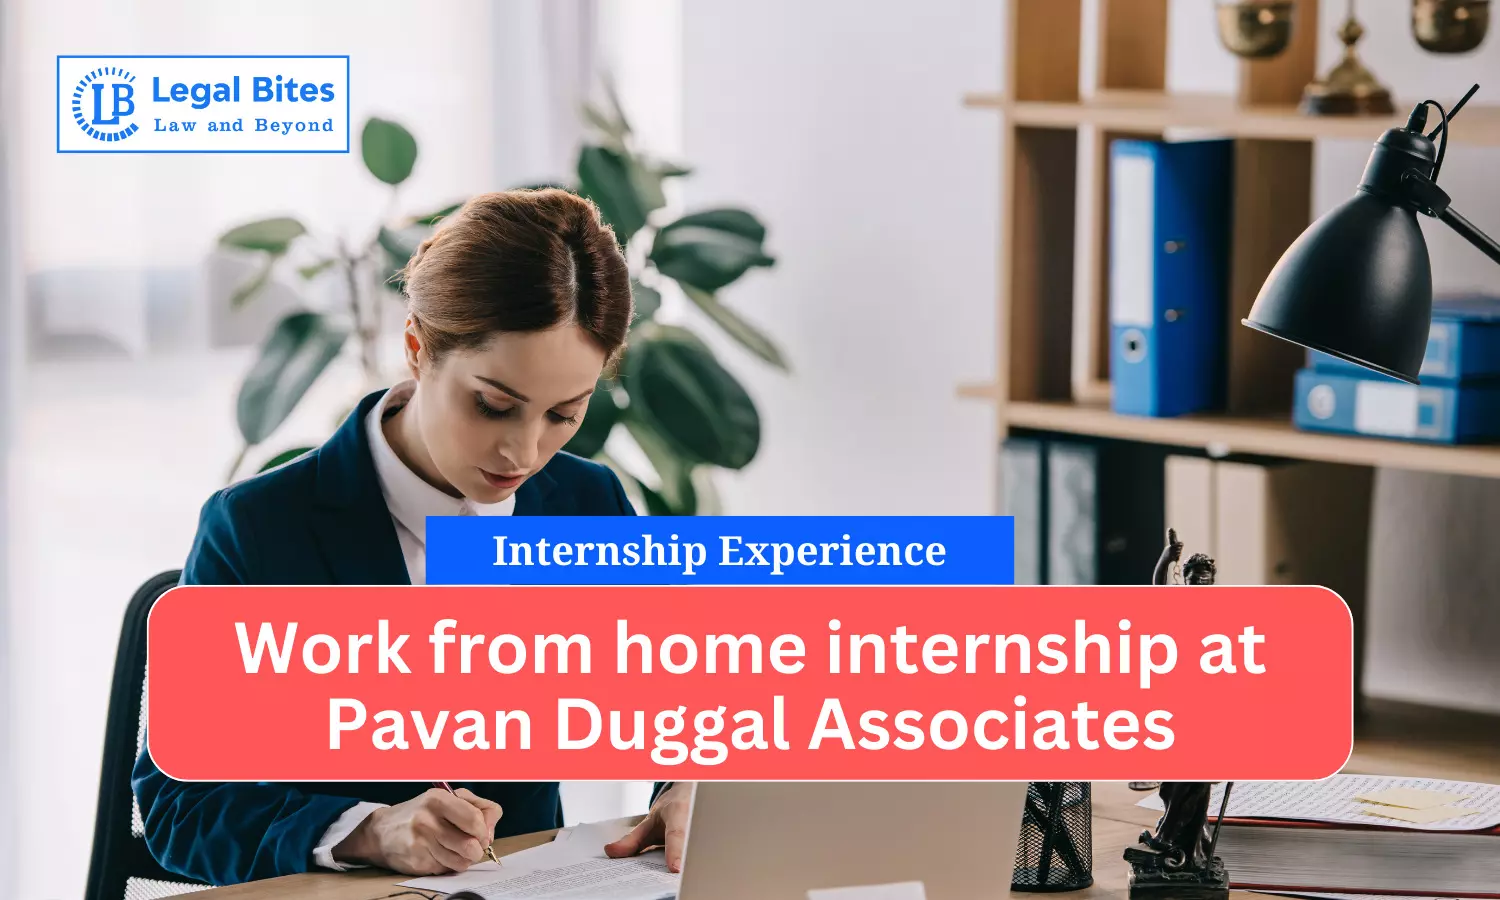 Internship Experience: Work from home internship at Pavan Duggal Associates